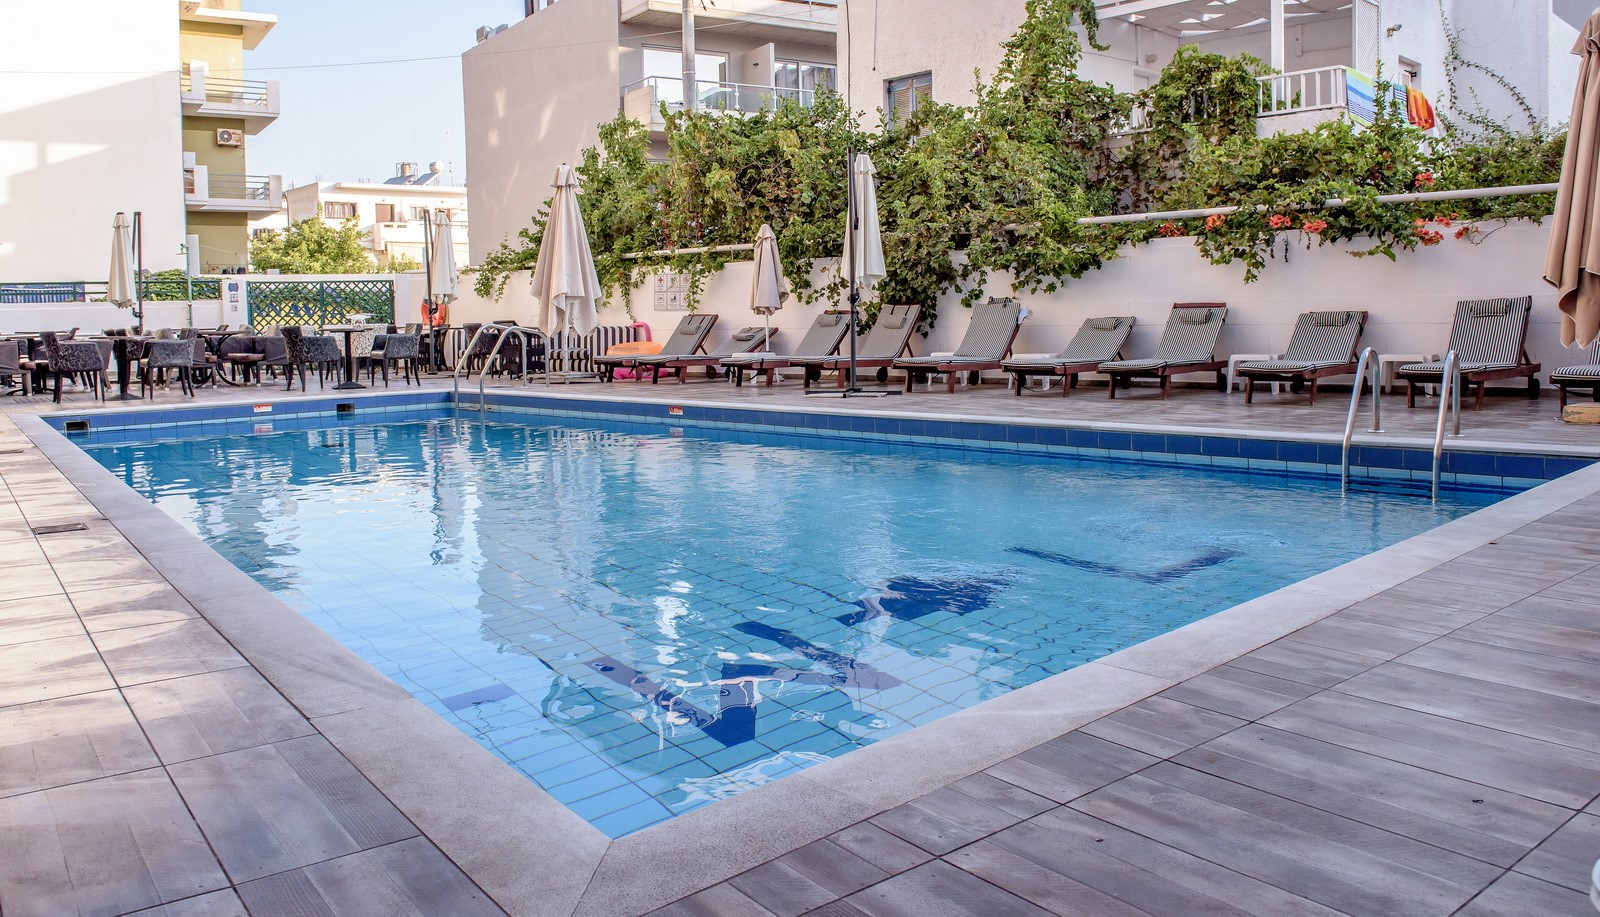 Pela Maria Hotel - Χερσόνησος, Κρήτη ✦ 2 Ημέρες (1 Διανυκτέρευση) ✦ 2 άτομα ✦ 12 ✦ 15/04/2022 έως 30/09/2022 ✦ Υπέροχη Τοποθεσία!